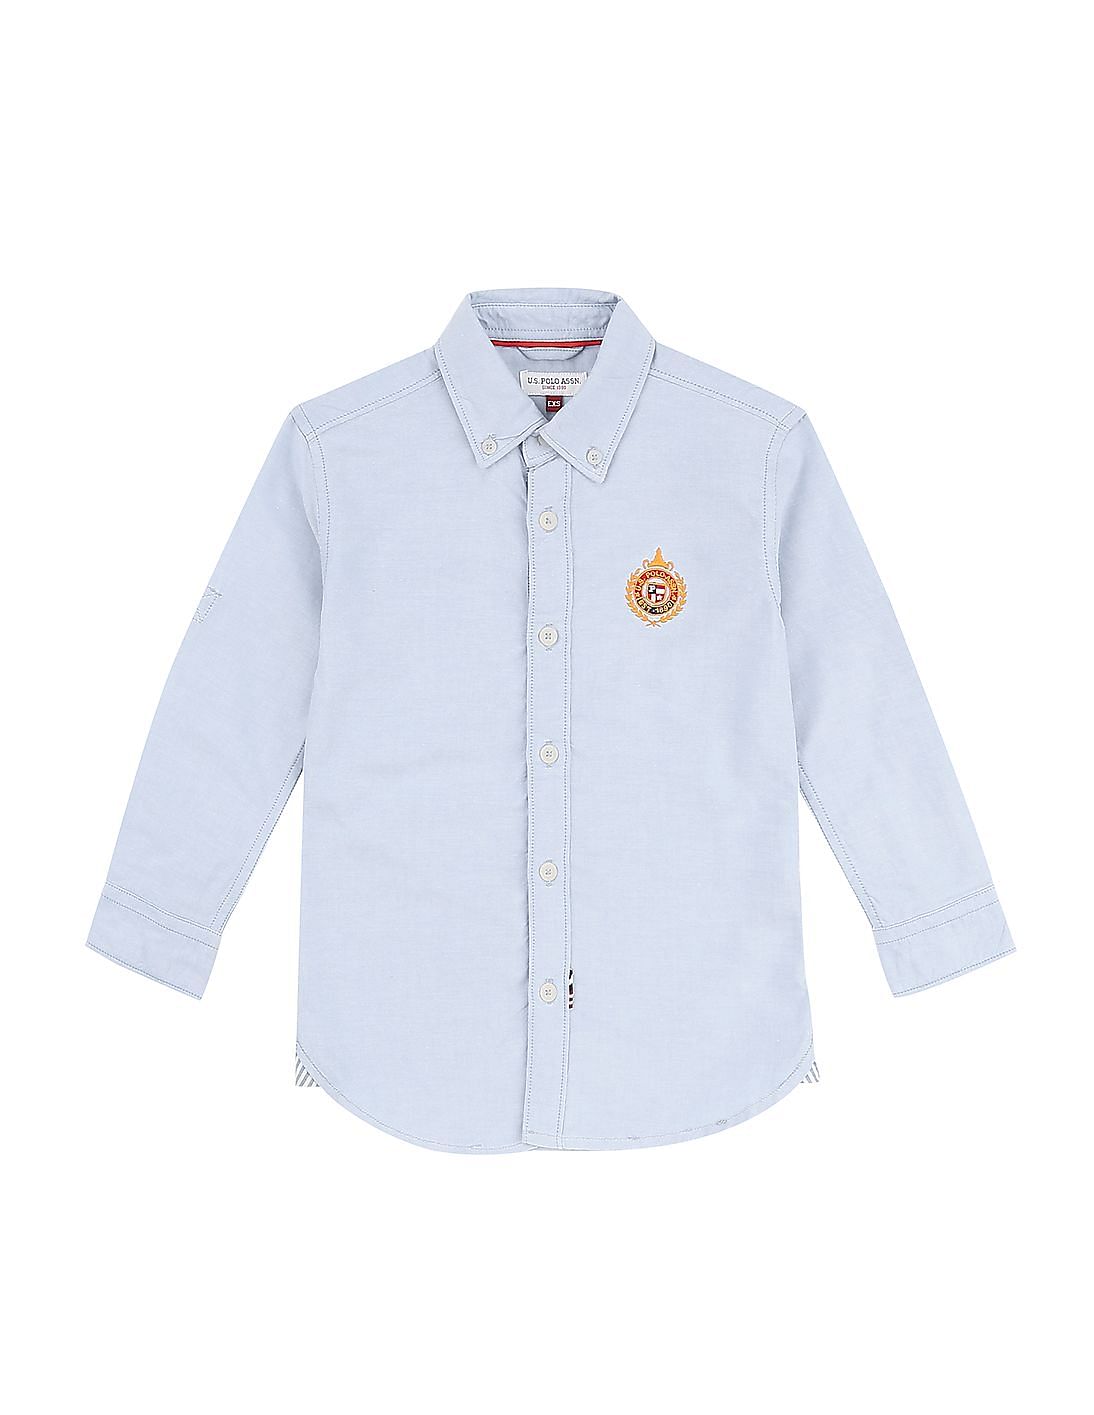 Buy U.S. Polo Assn. Kids Boys Button Down Oxford Shirt - NNNOW.com